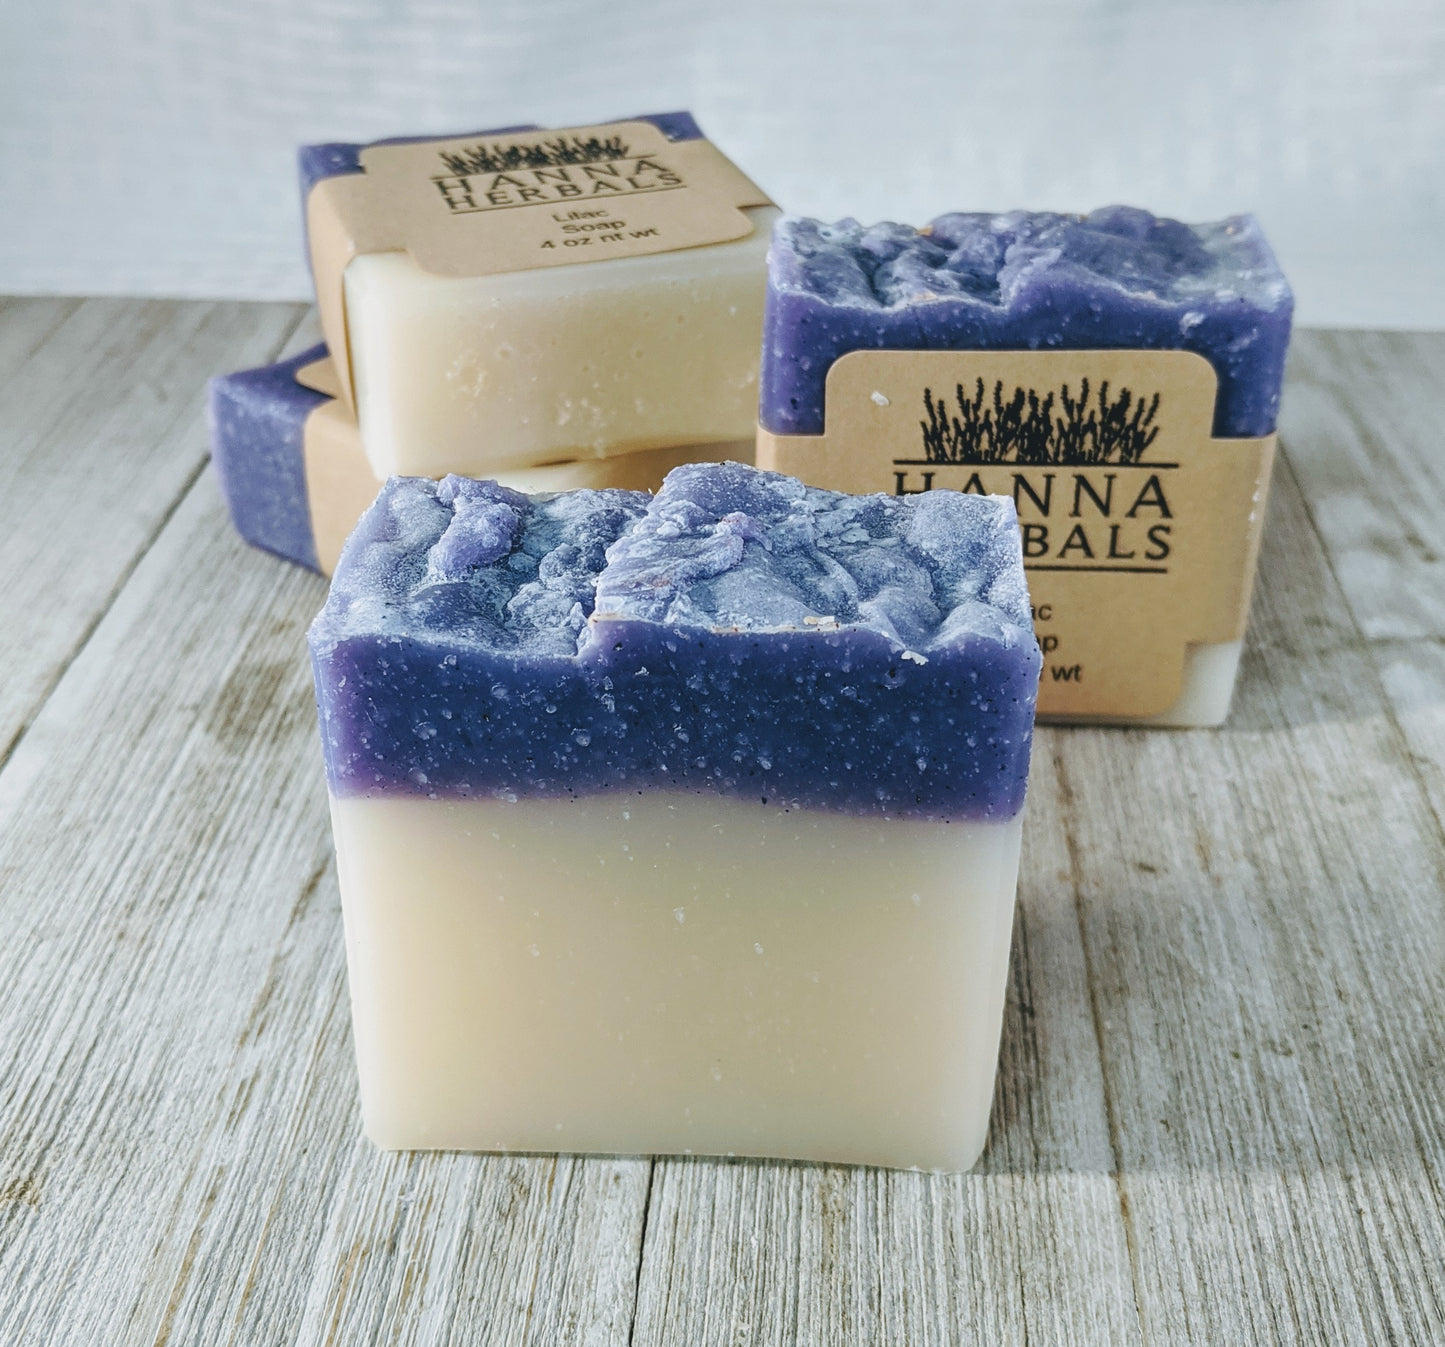 Lilac Soap - Hanna Herbals